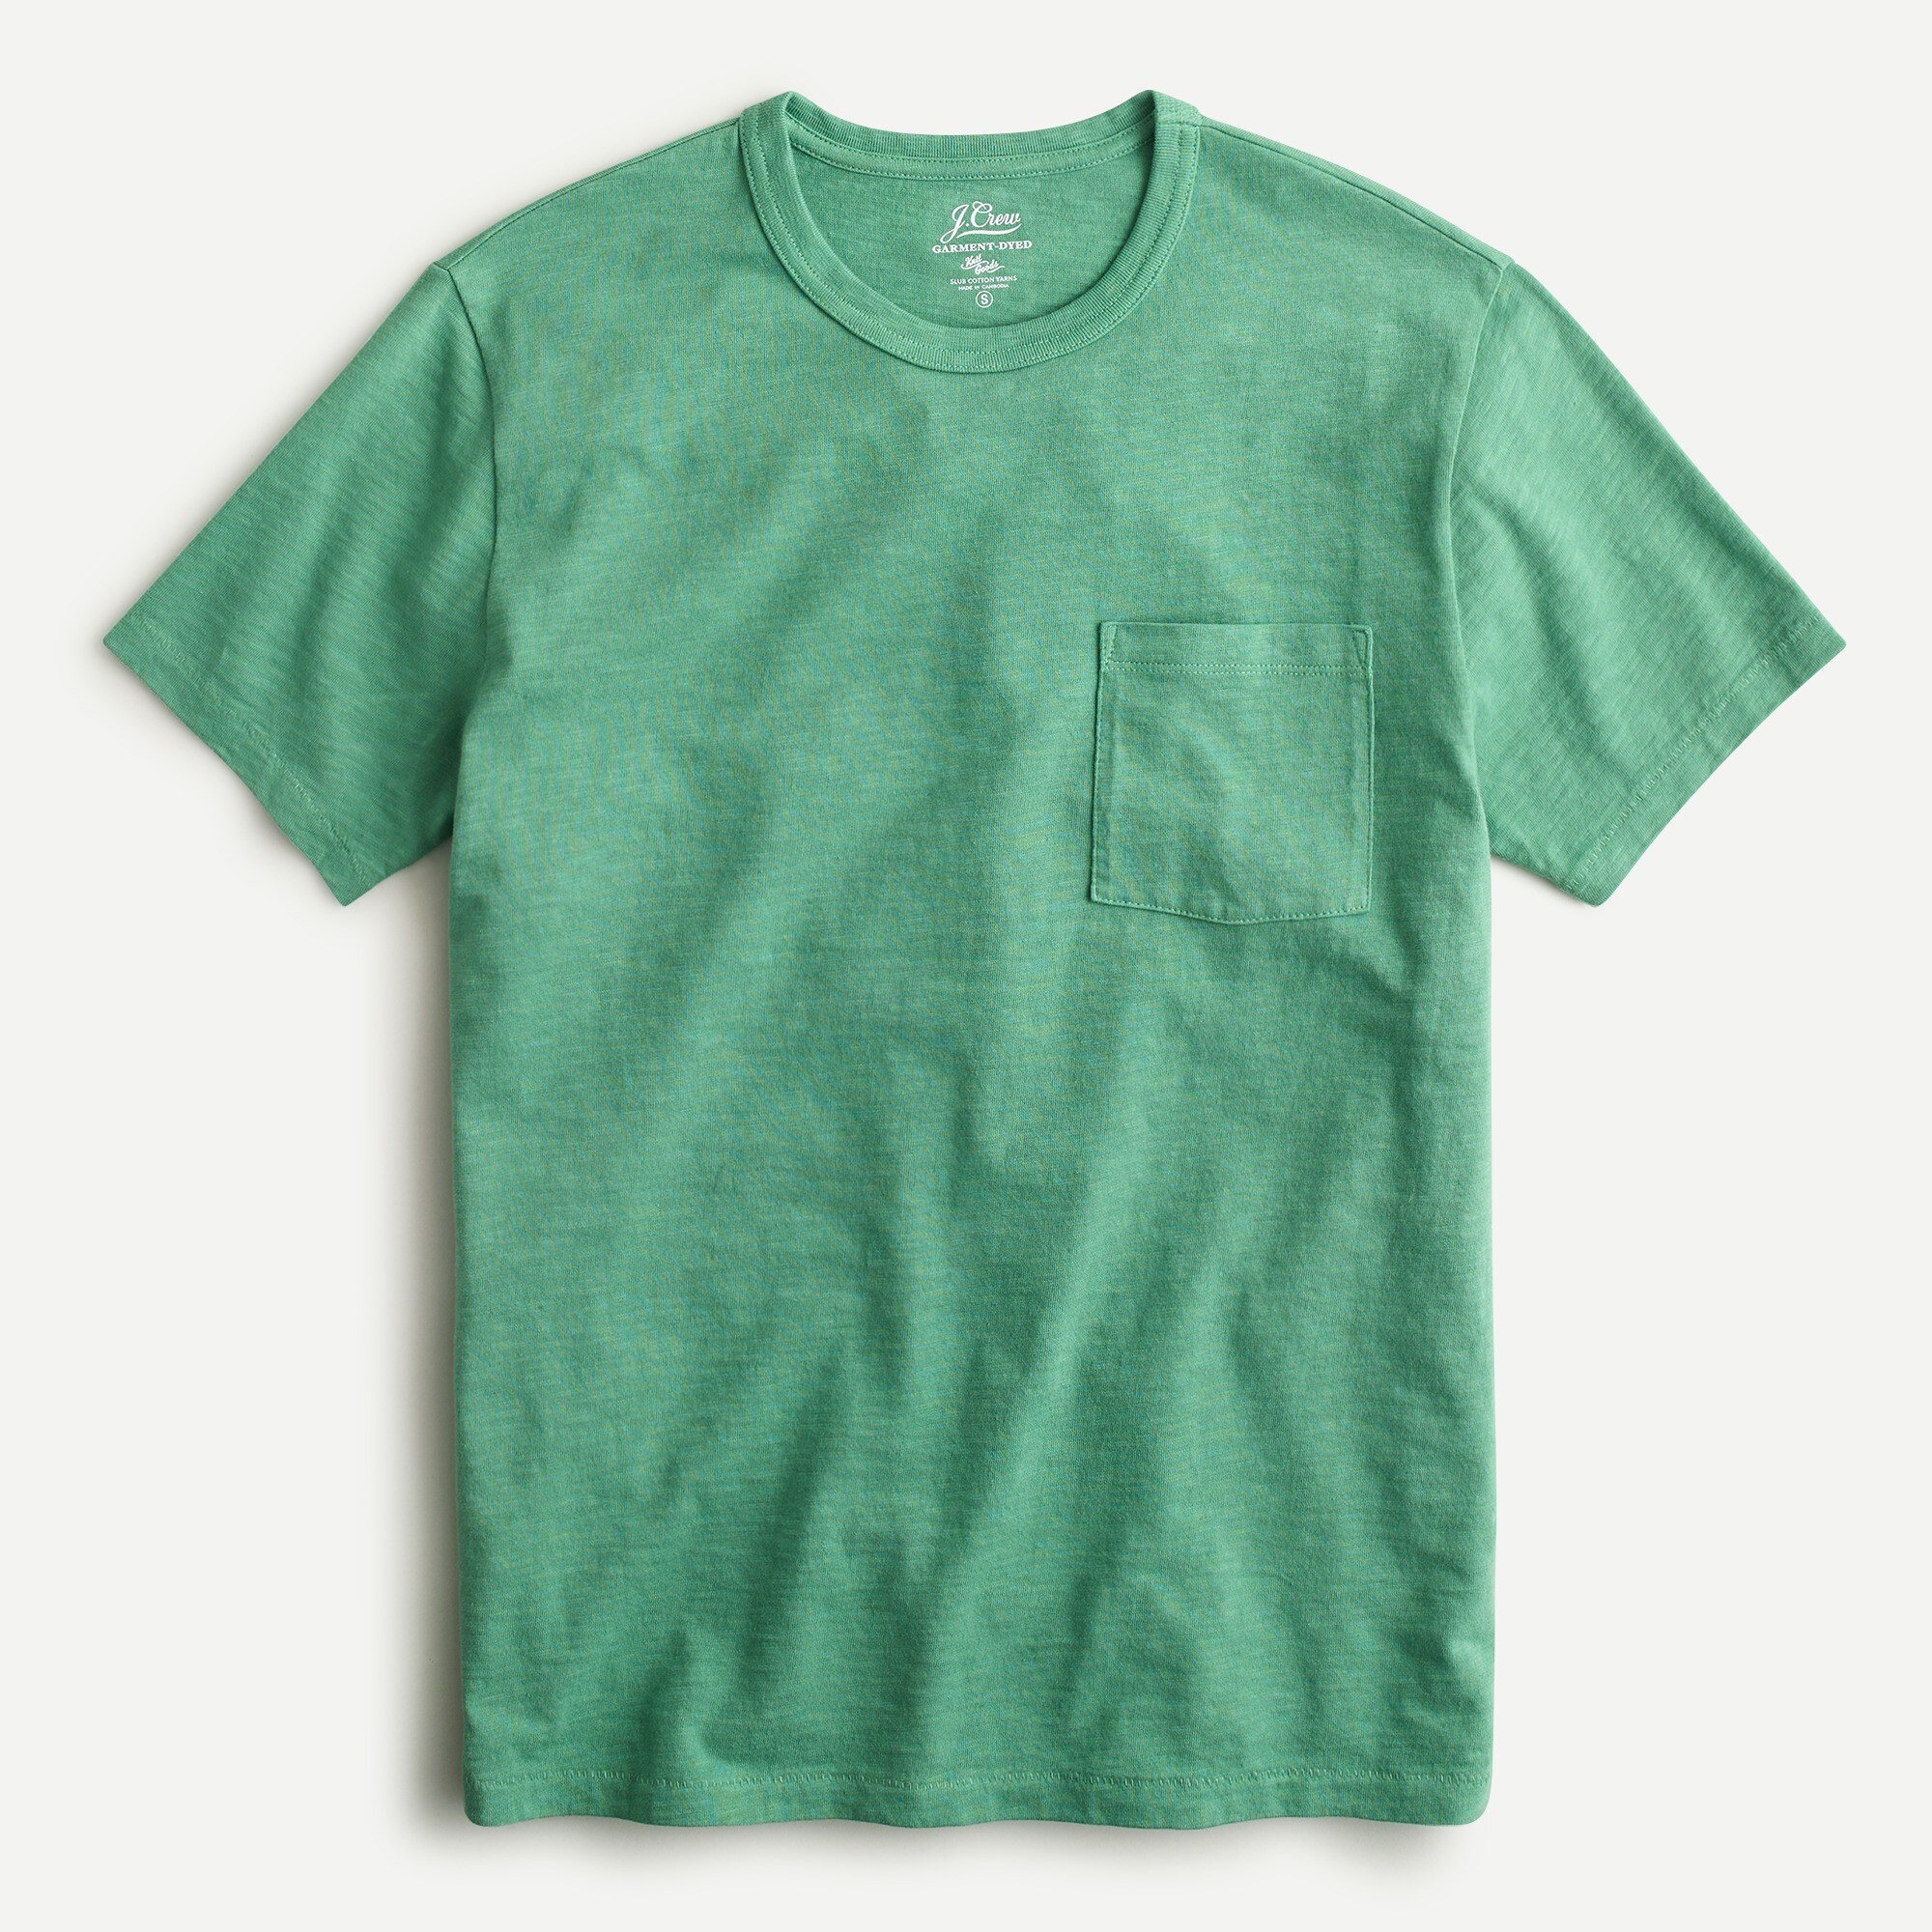 mens Garment-dyed slub cotton crewneck T-shirt